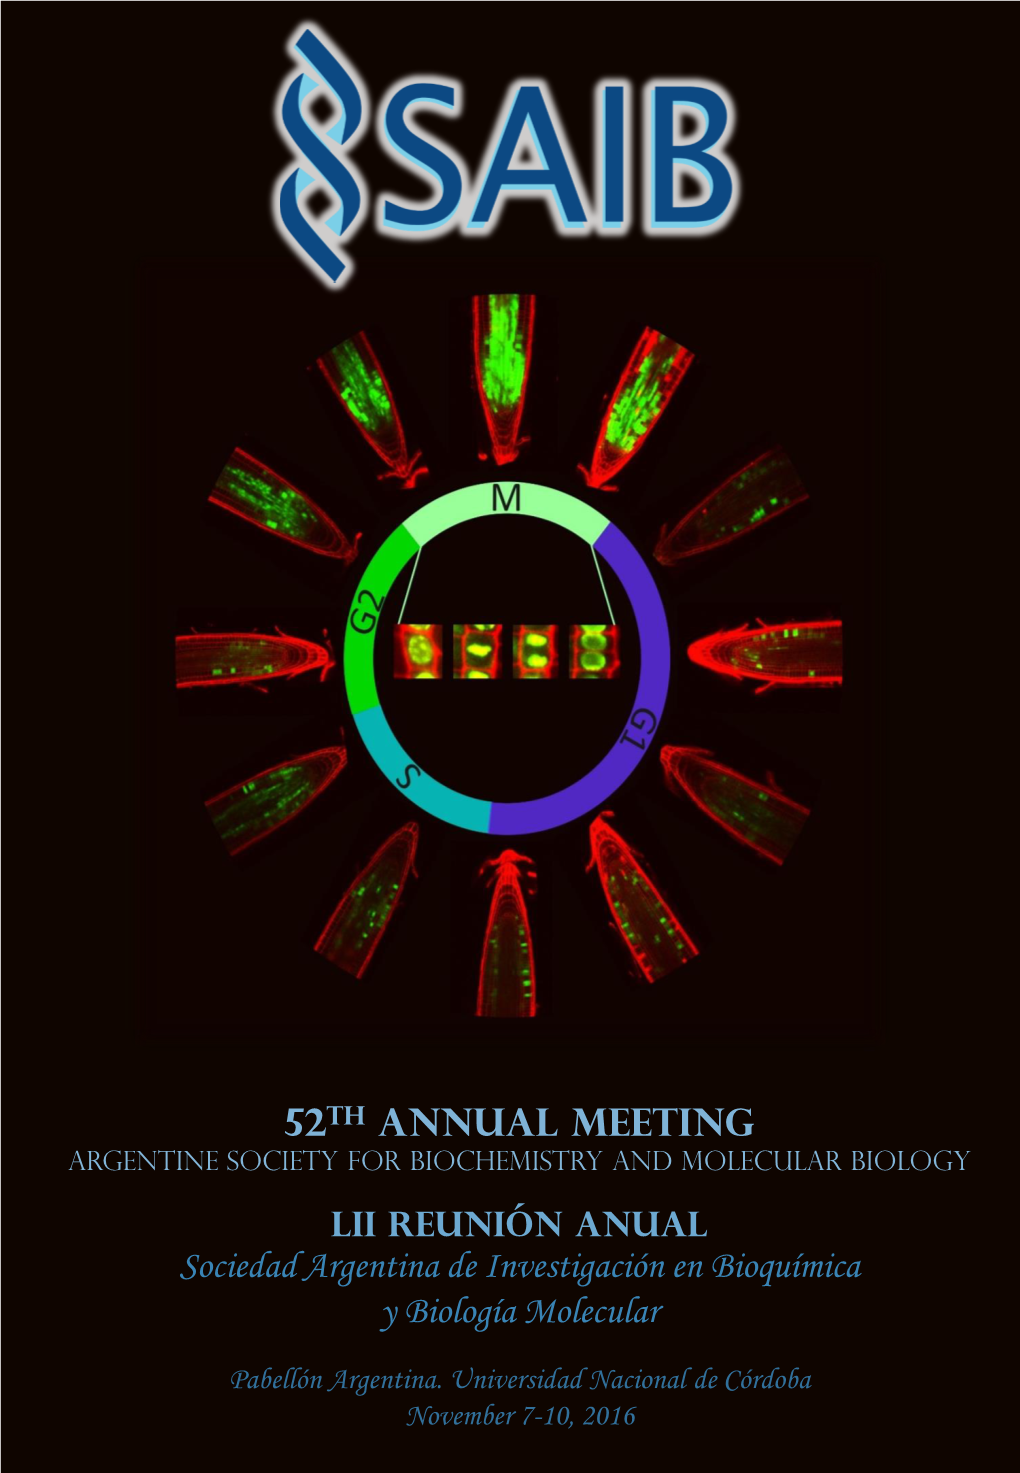 SAIB - 52Th Annual Meeting Argentine Society for Biochemistry and Molecular Biology